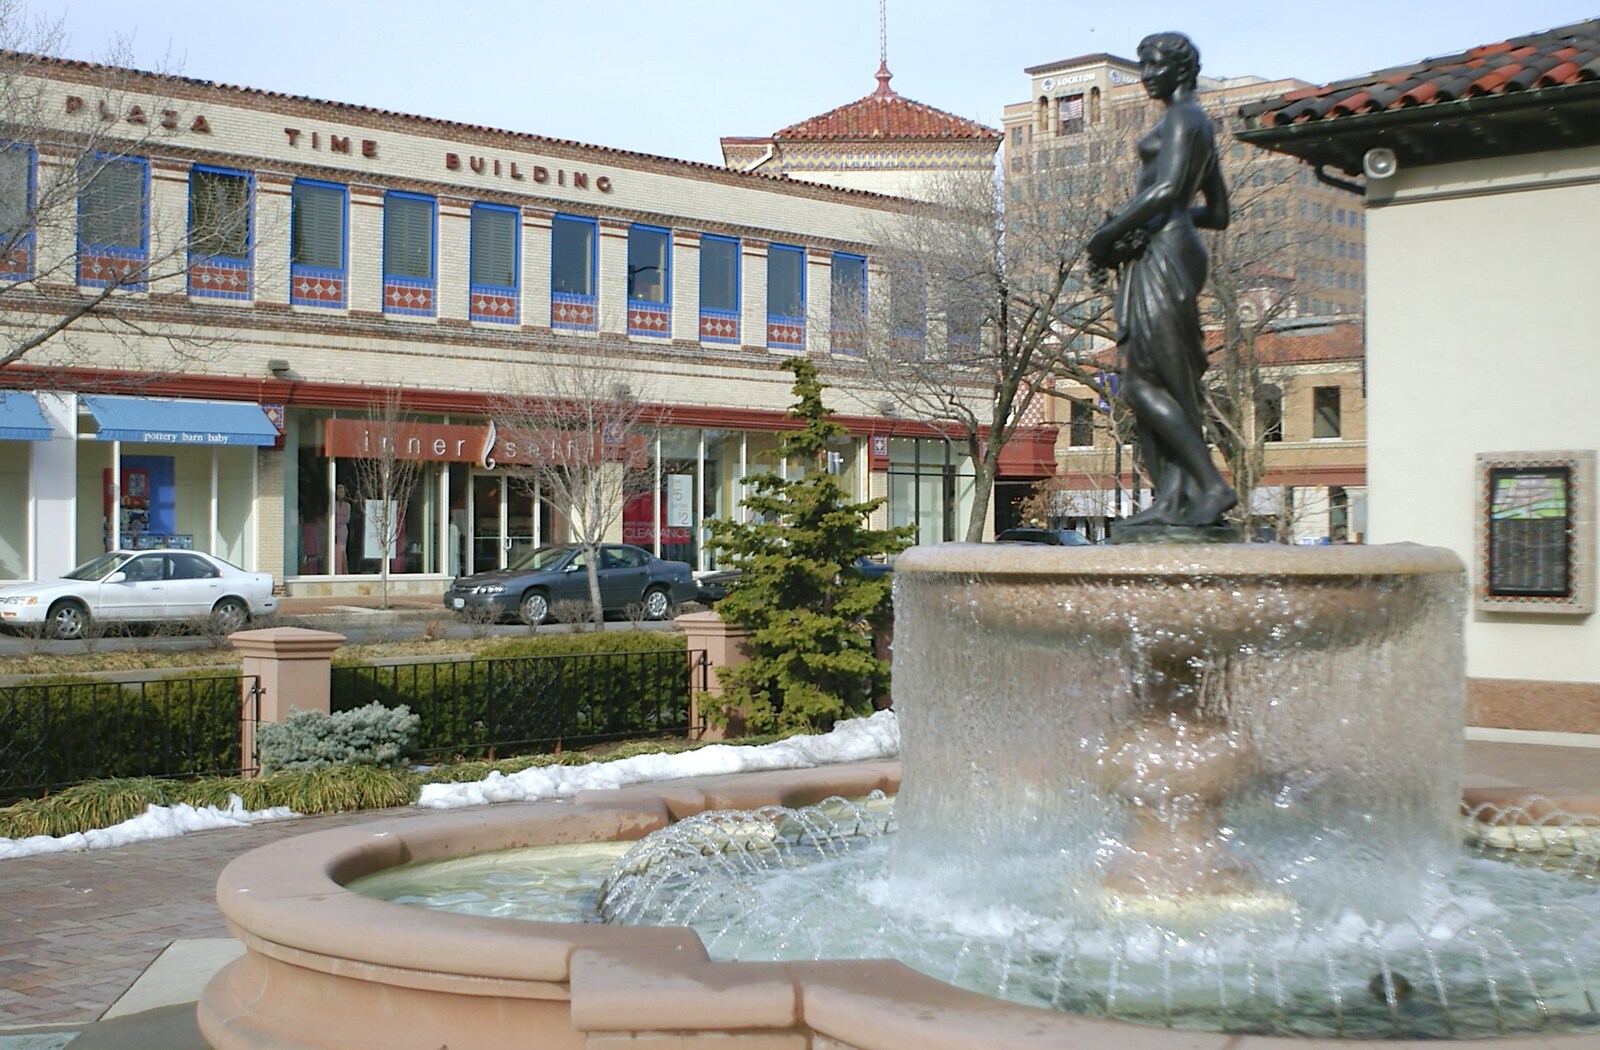 A Visit to Sprint, Overland Park, Kansas City, Missouri, US - 16th January 2005: A fountain near the Plaza Time Building